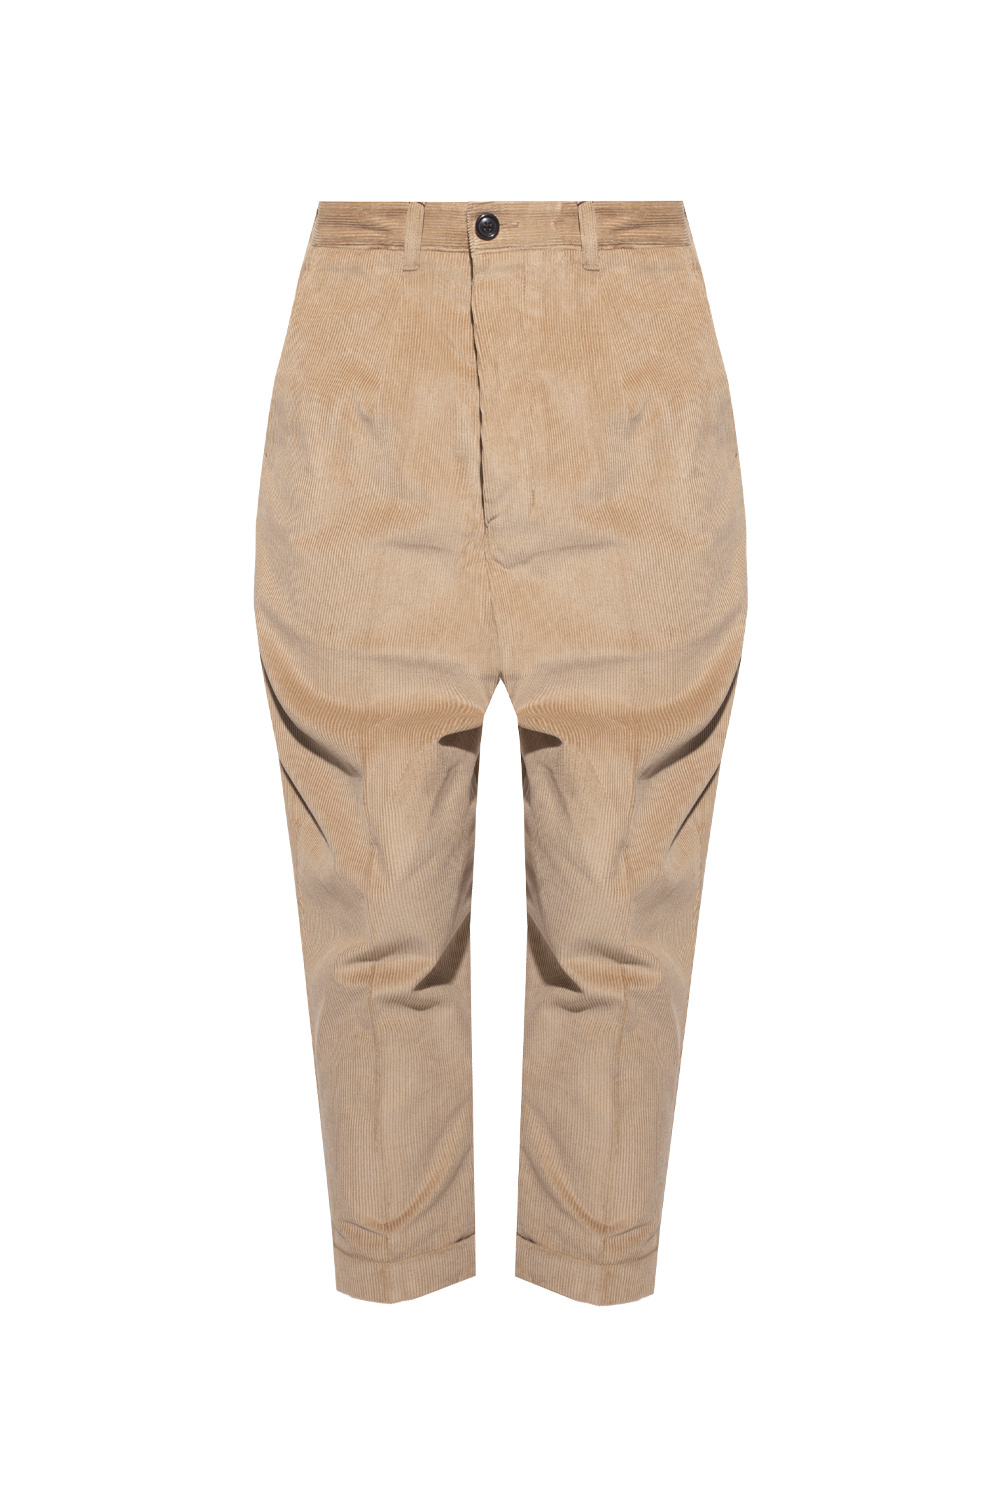 The Brown Corduroy Richmond Chino Custom Pant